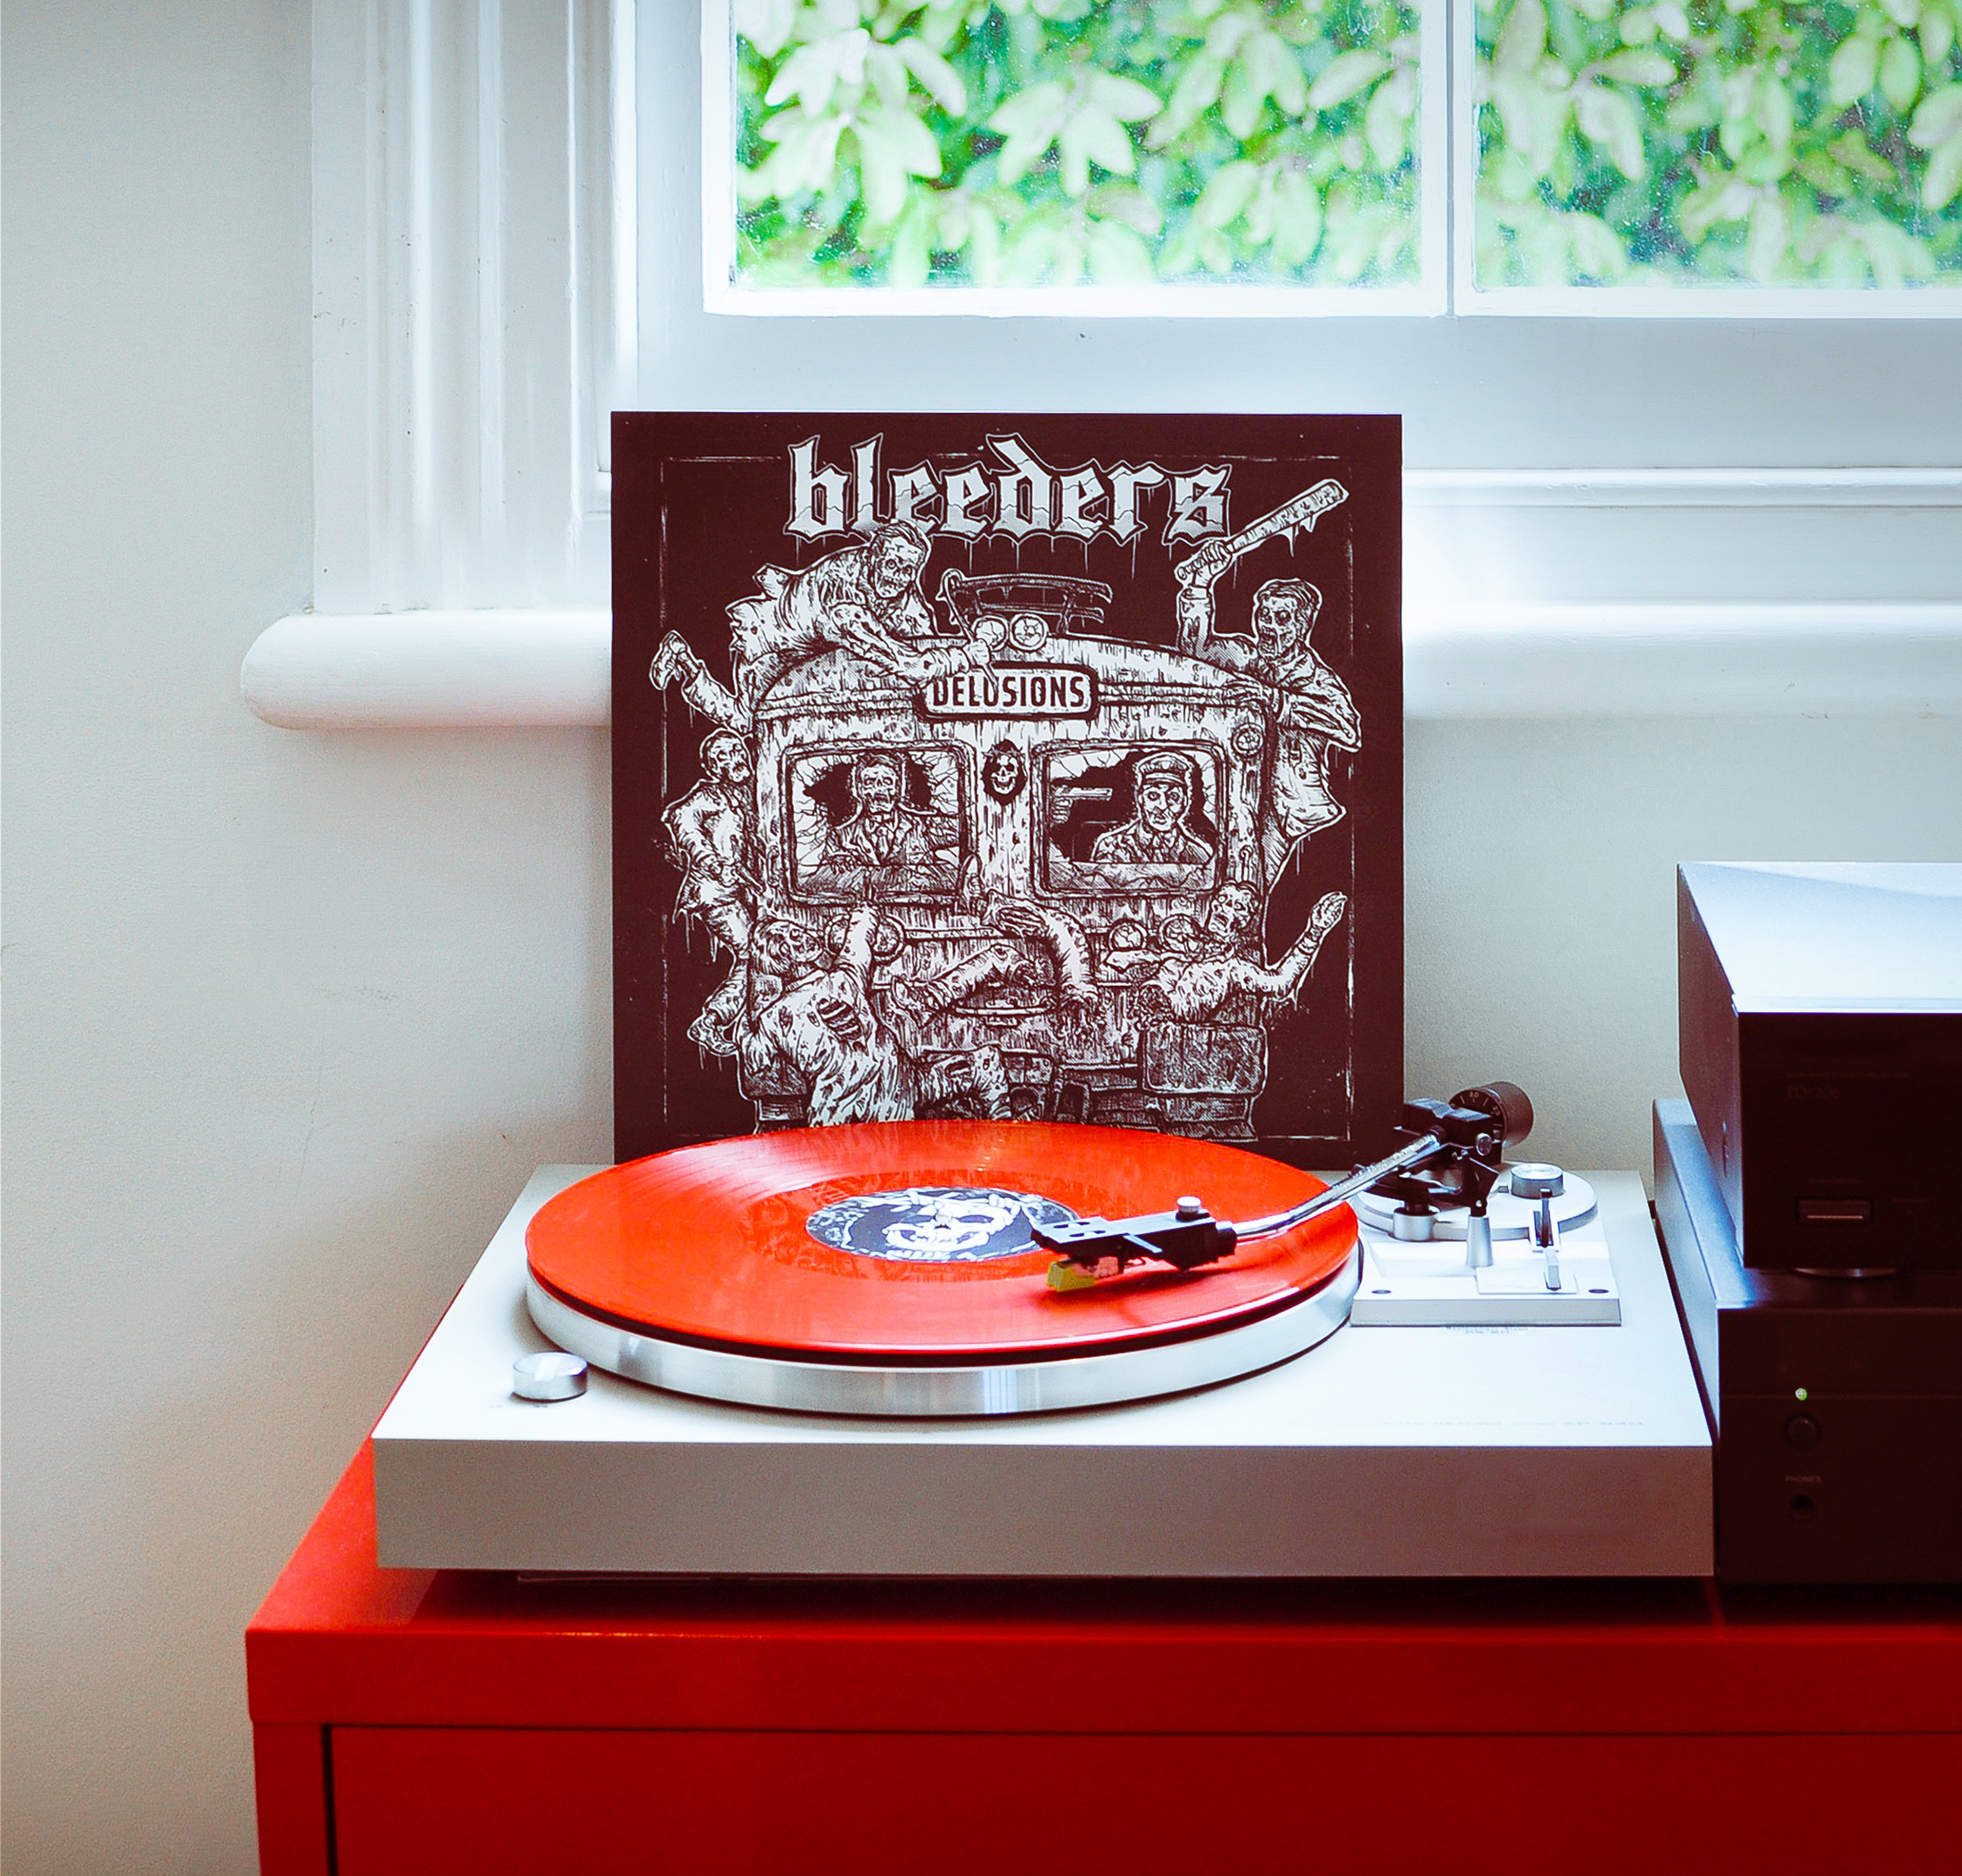 Bleeders Album Artwork on Turntable